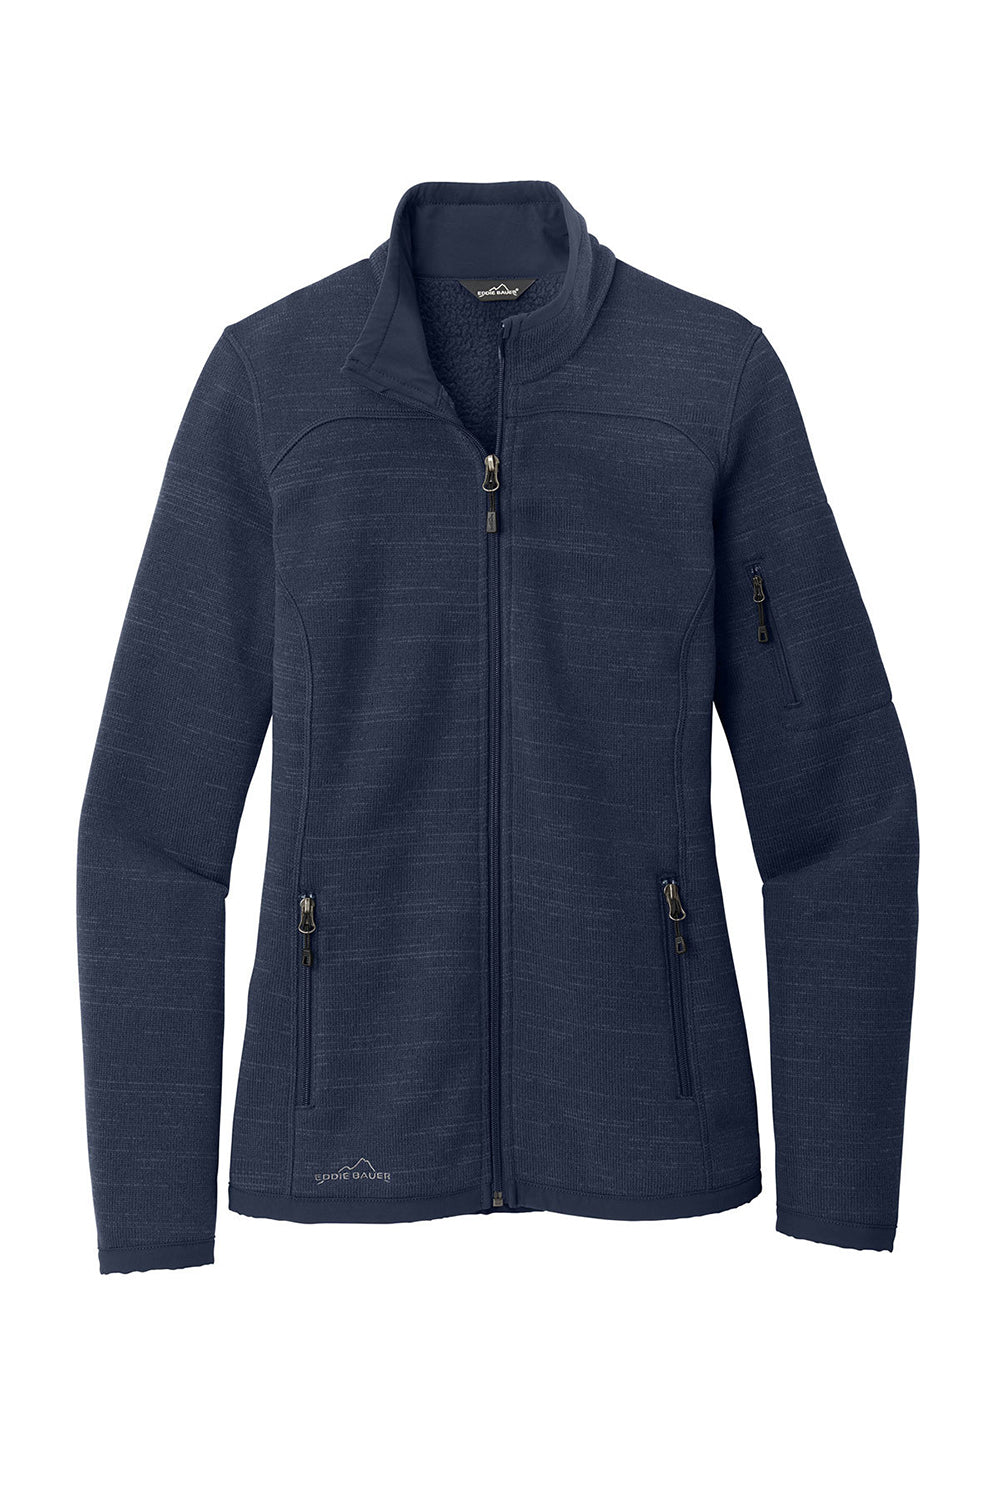 Eddie Bauer EB251 Womens Pill Resistant Fleece Full Zip Jacket Heather River Navy Blue Flat Front